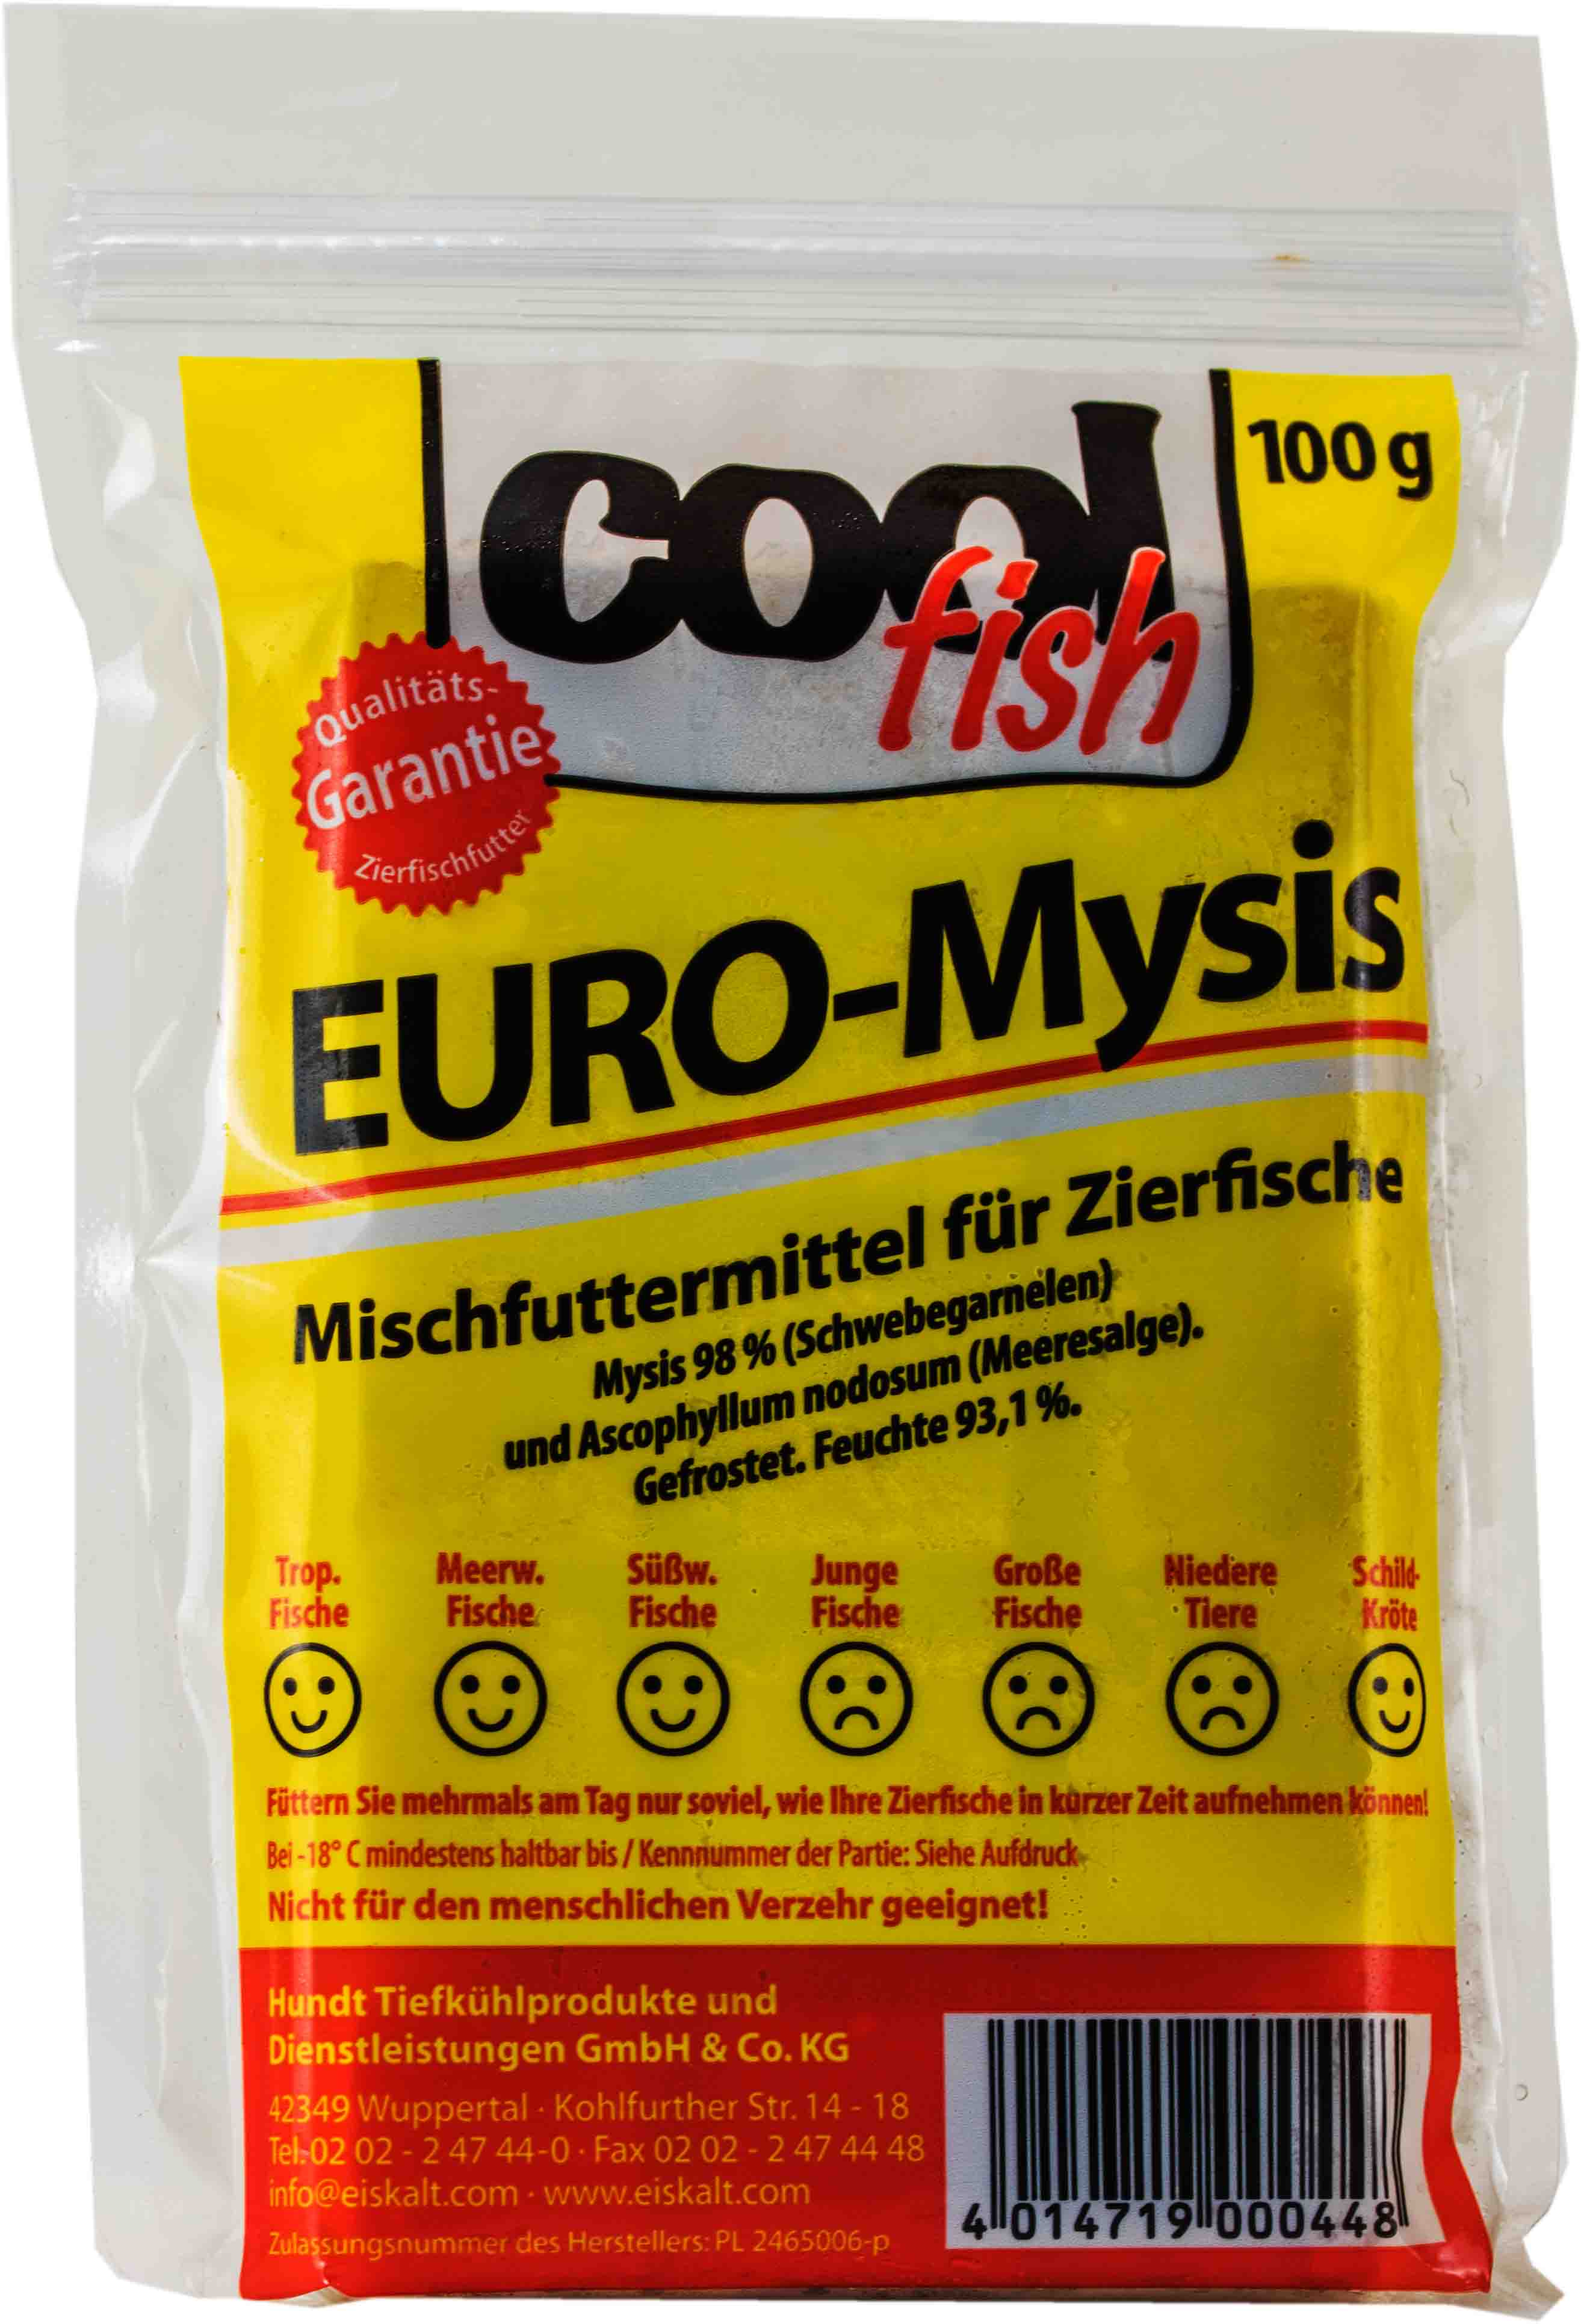 cool fish EURO-Mysis - Schoko 100g